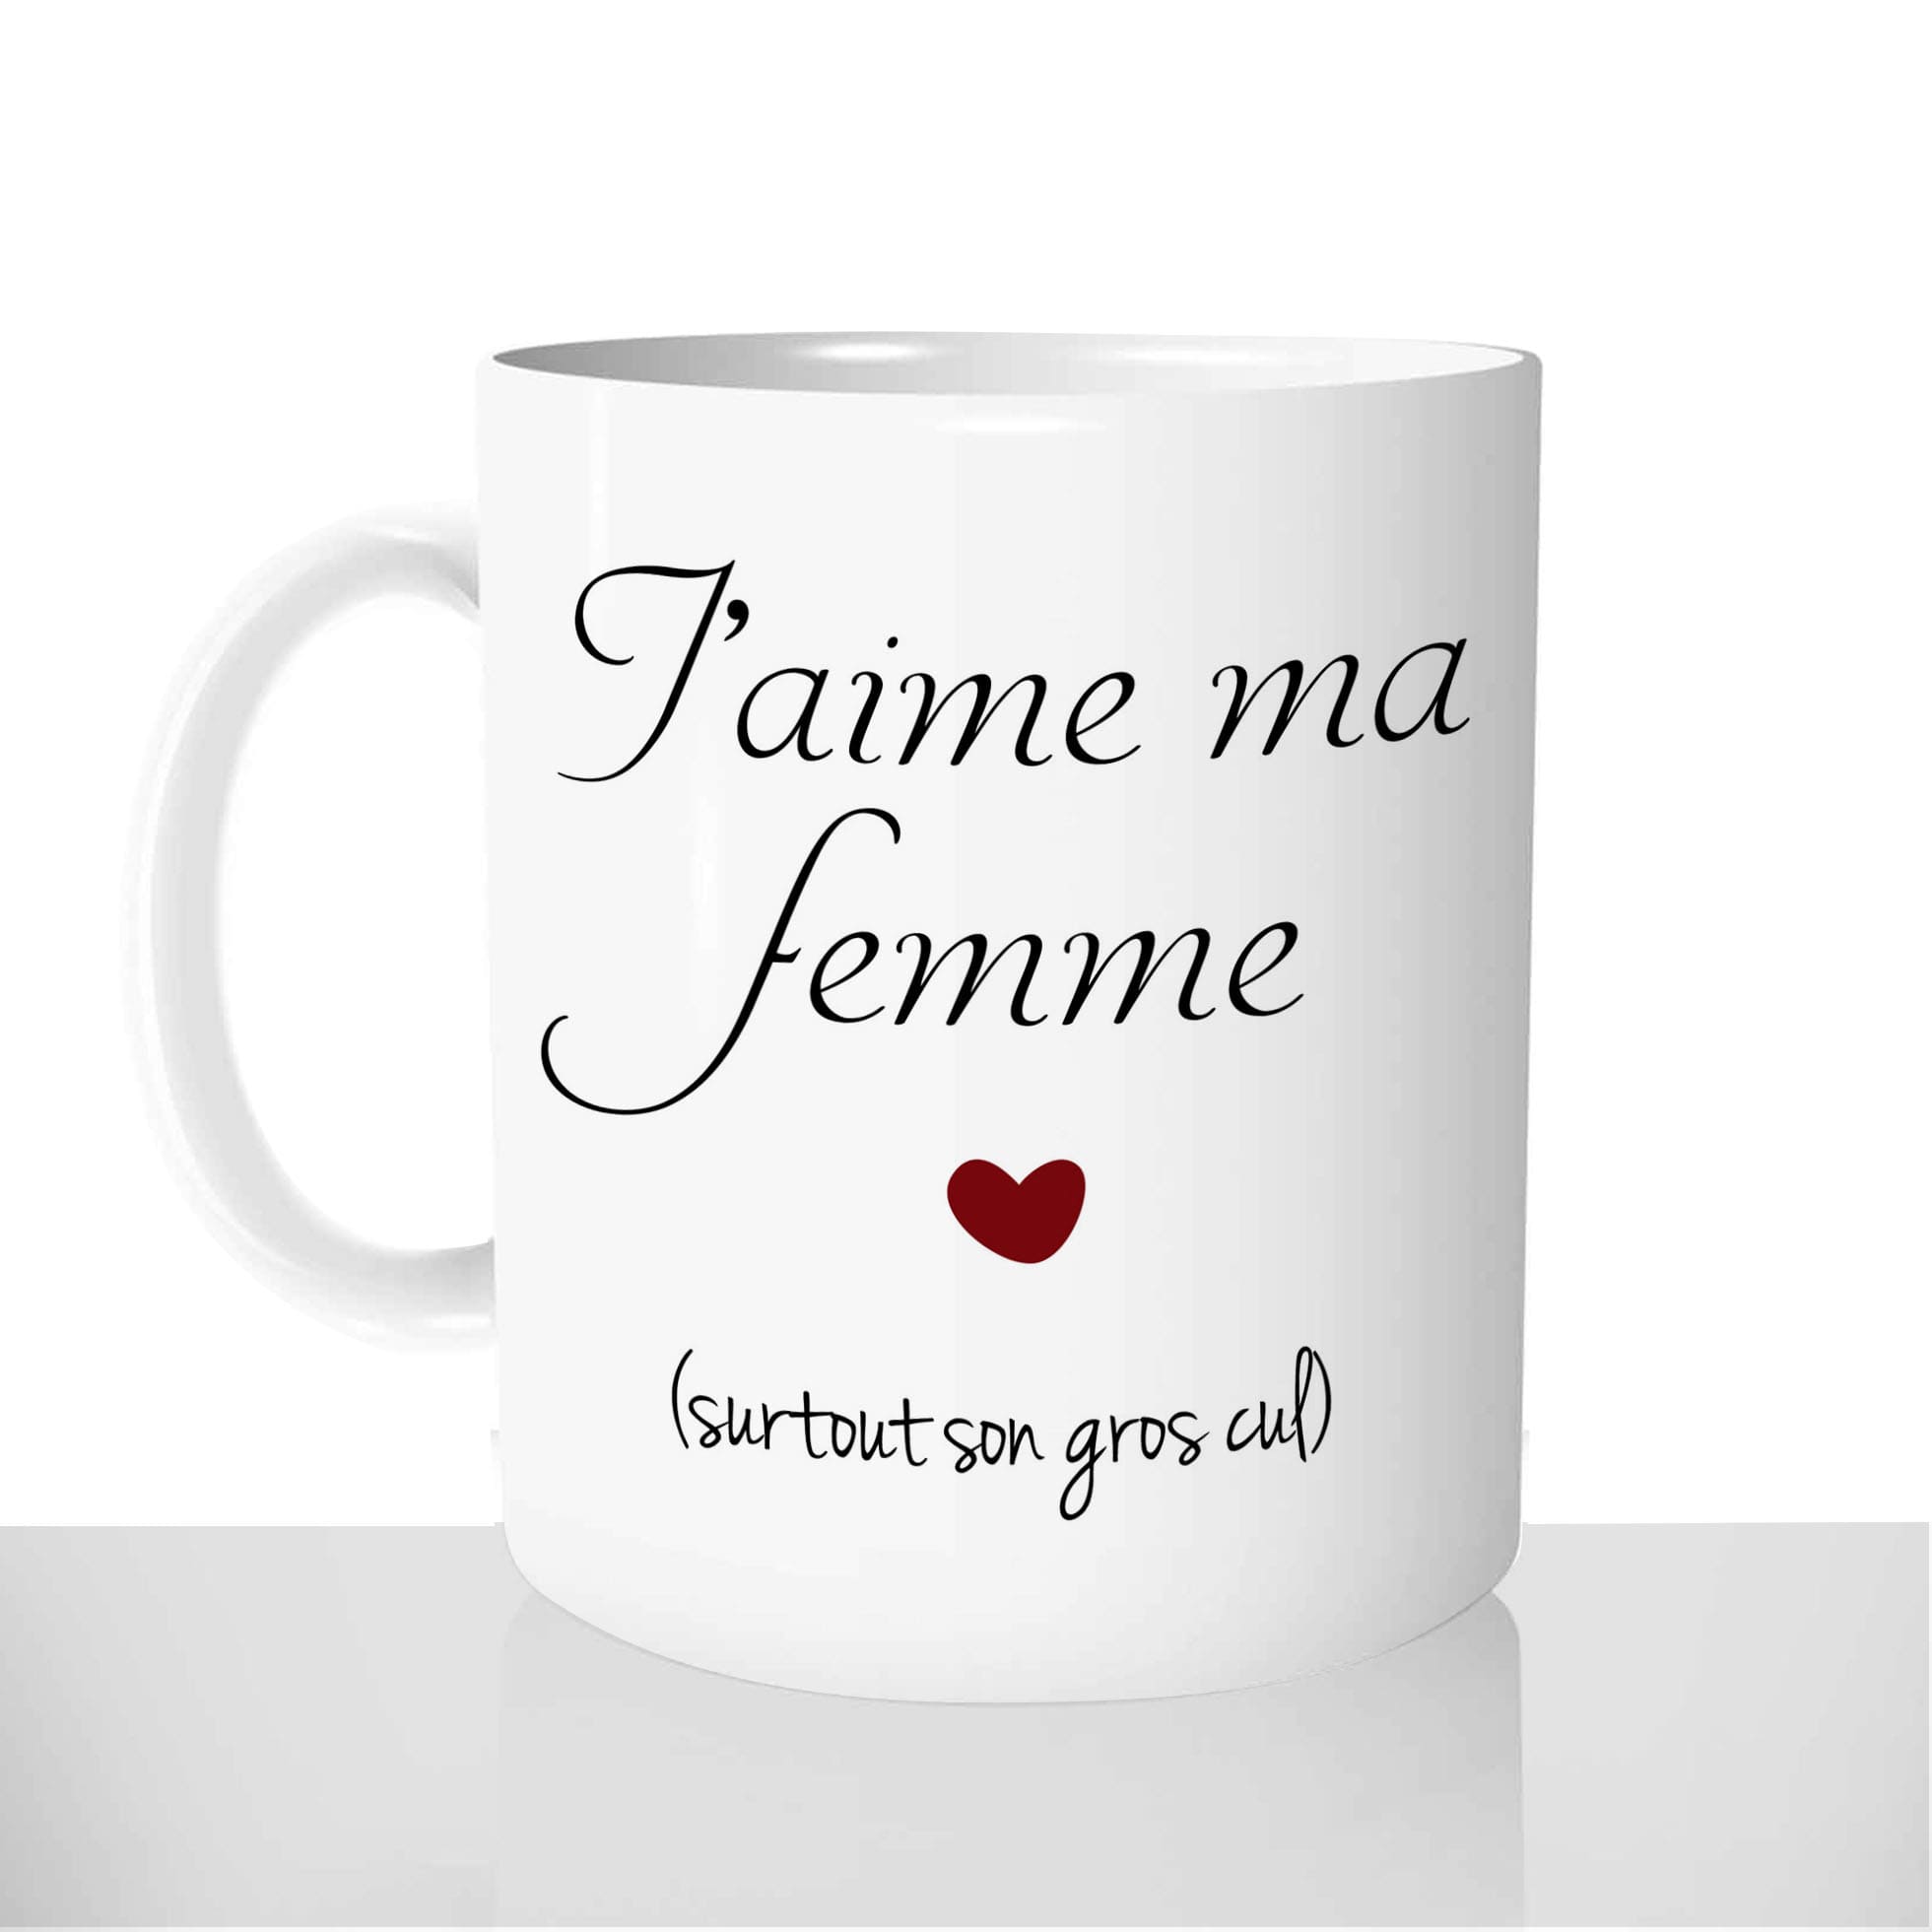 mug-blanc-brillant-personnalisé-offrir-jaime-ma-femme-amour-mariage-gros-cul-sexy-fun-personnalisable-idée-cadeau-original